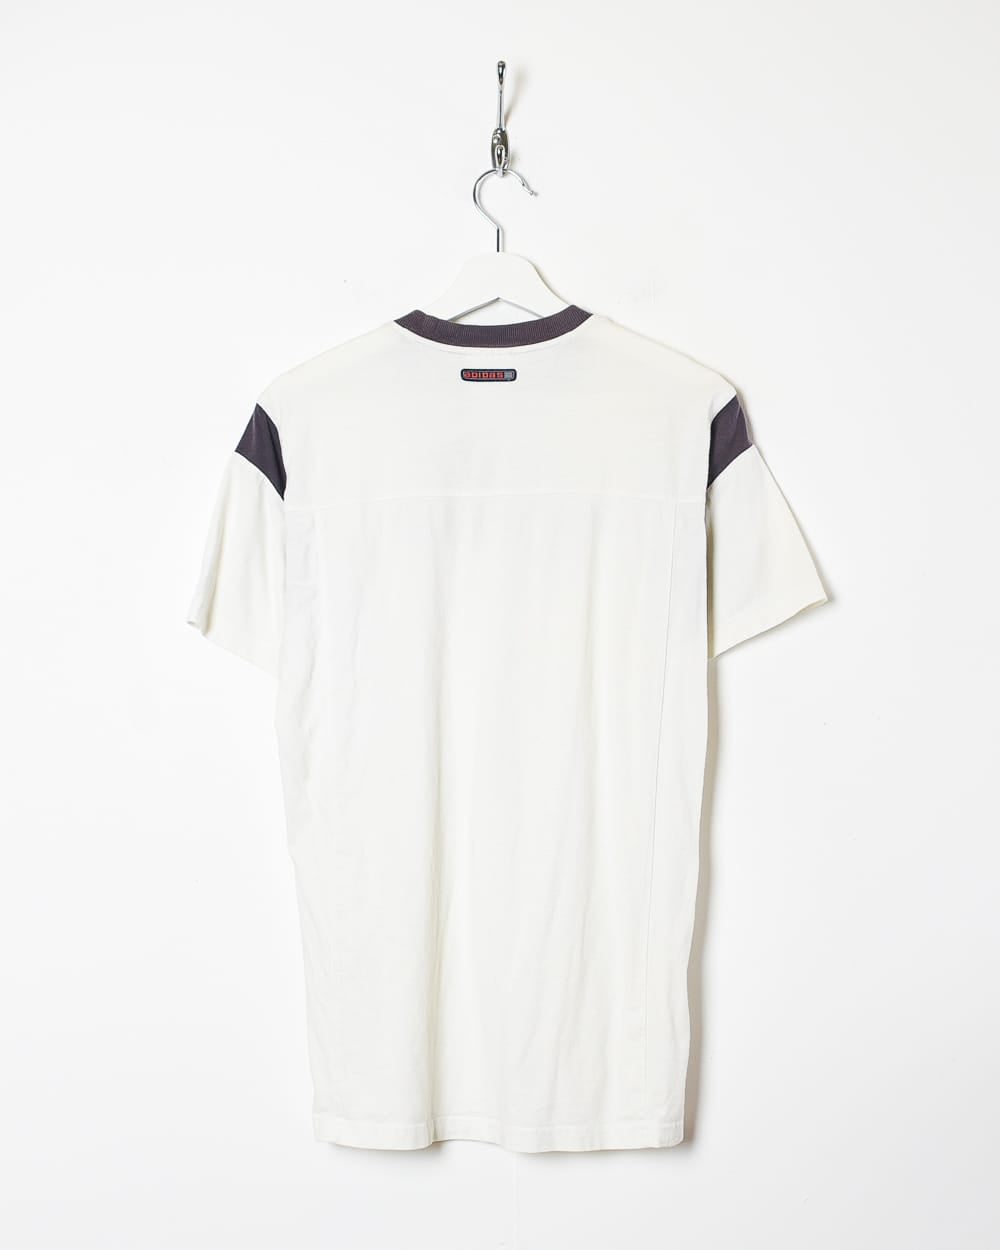 White Adidas T-Shirt - X-Large women's